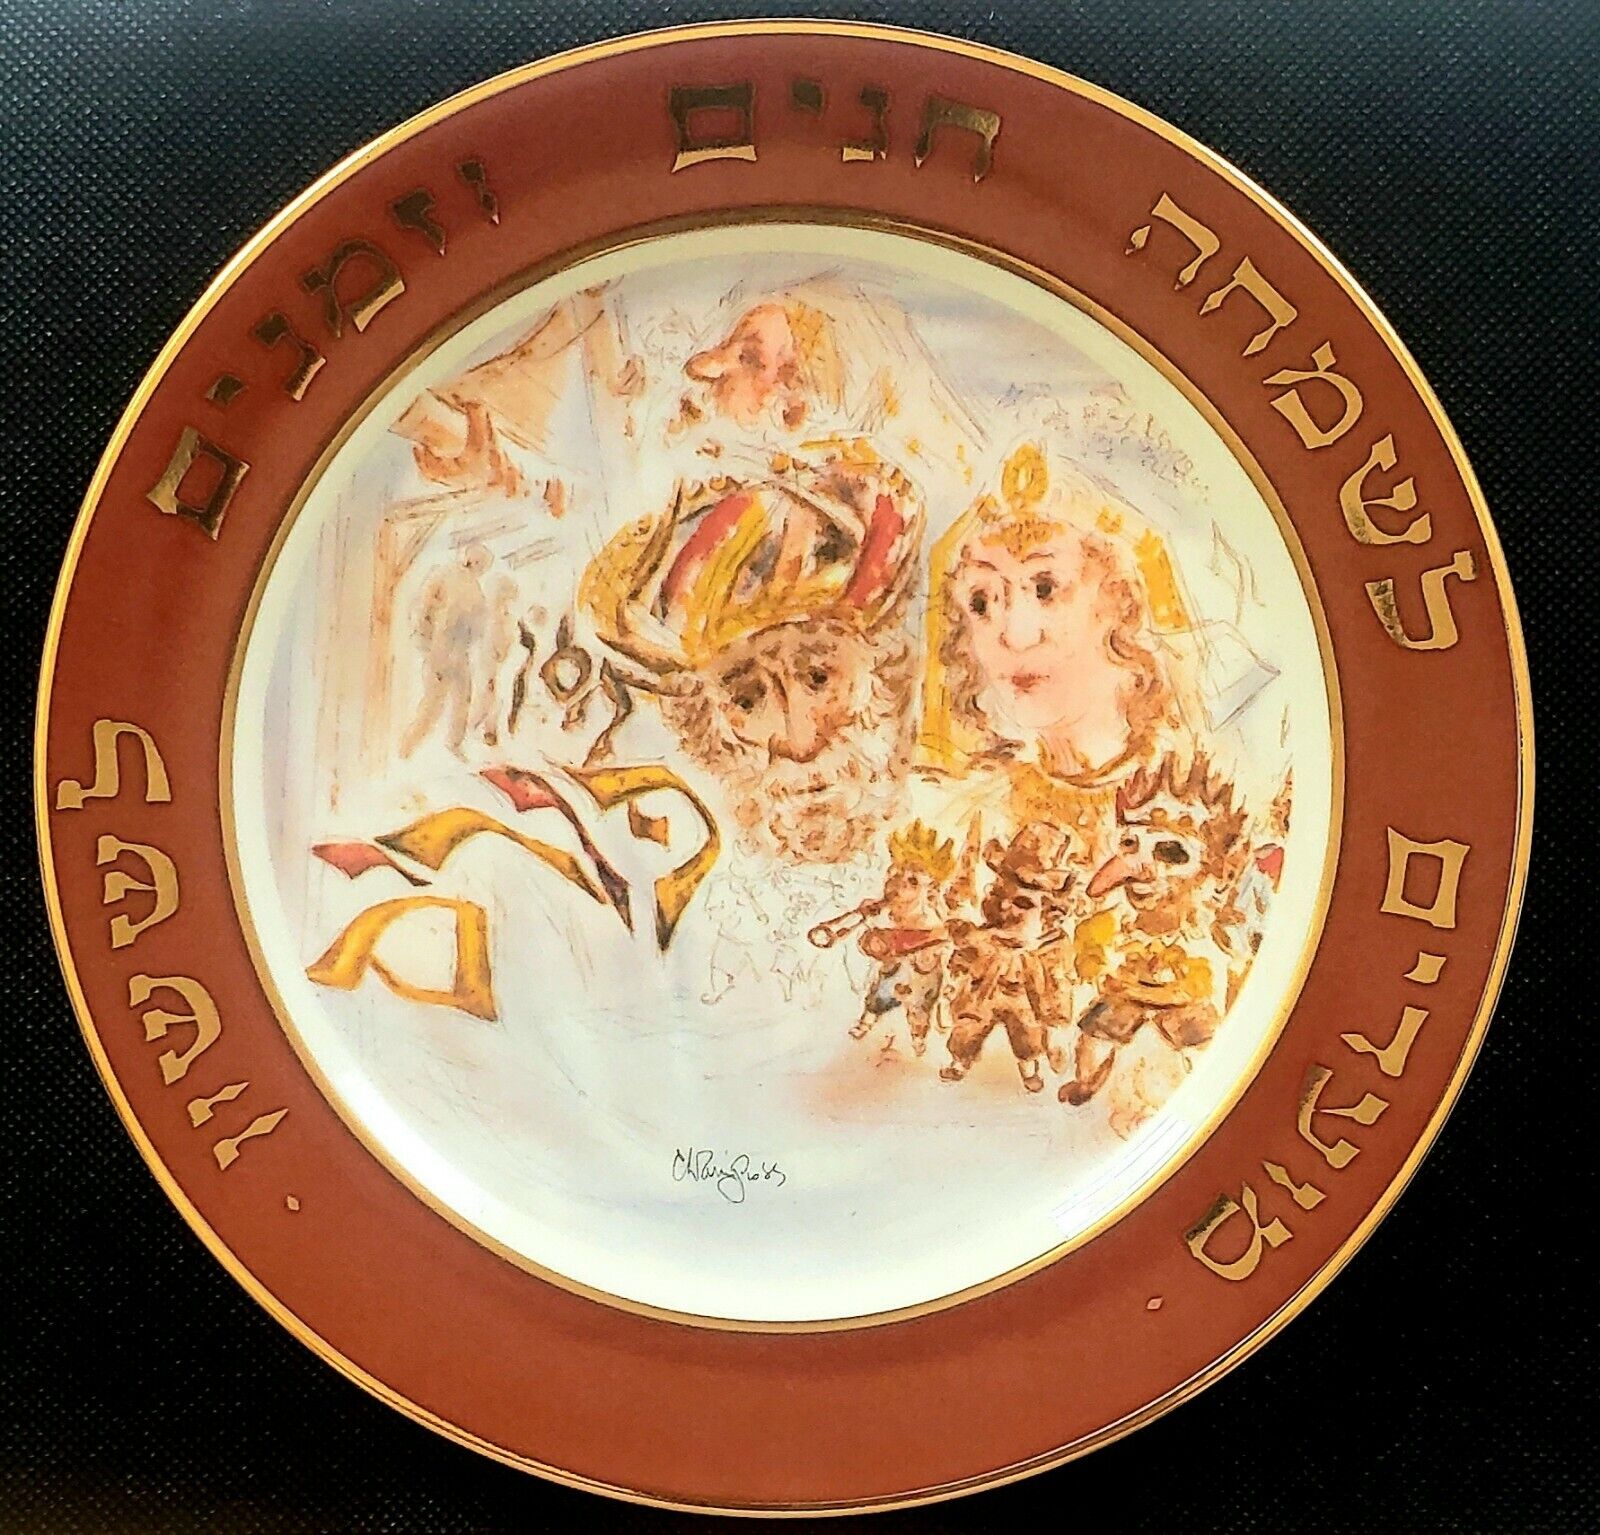 Vintage Judaica Purim Plate by Artist Chaim Gross 1980 Limited Edition